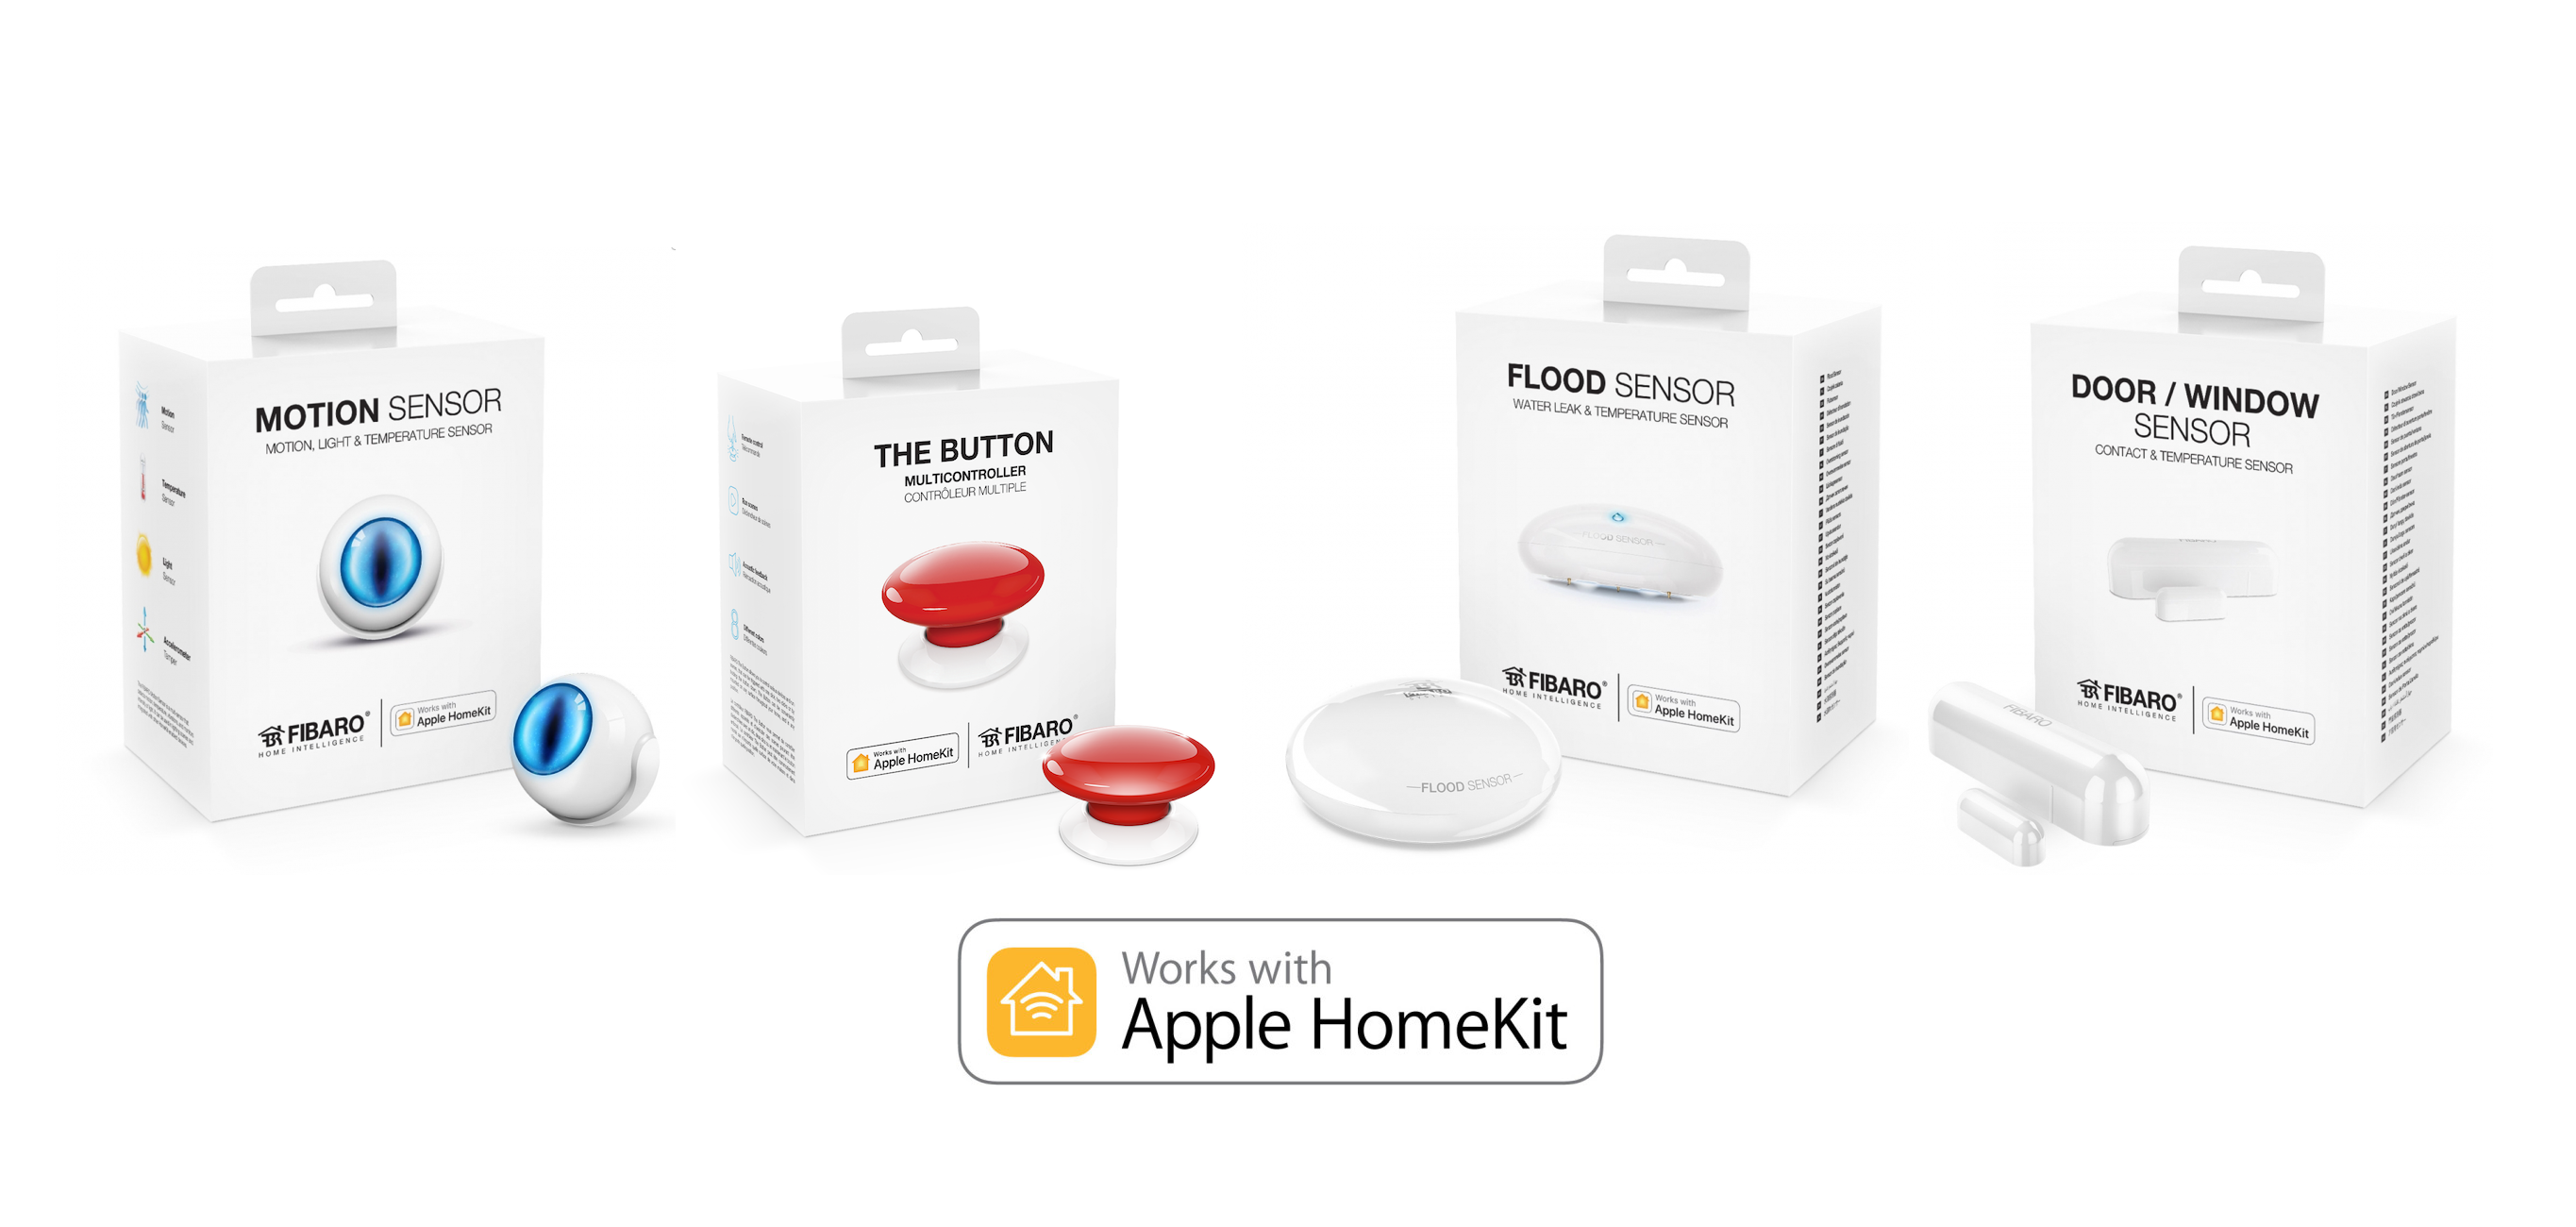 HomeKit Enabled Bra.vo S4 multi-Sensor Released - Homekit News and Reviews